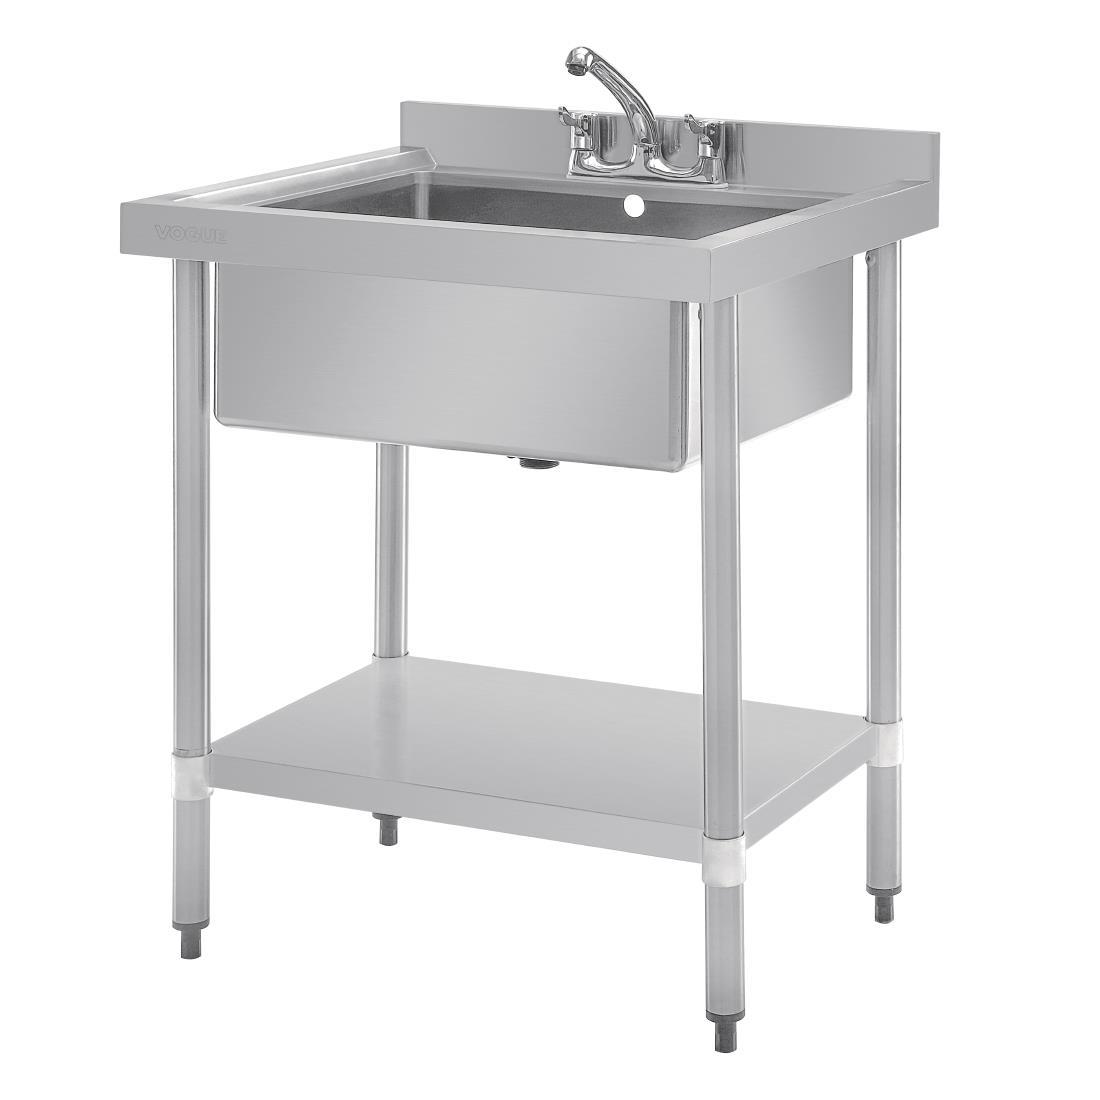 Vogue Stainless Steel Midi Pot Wash Sink with Undershelf - GJ537  - 3